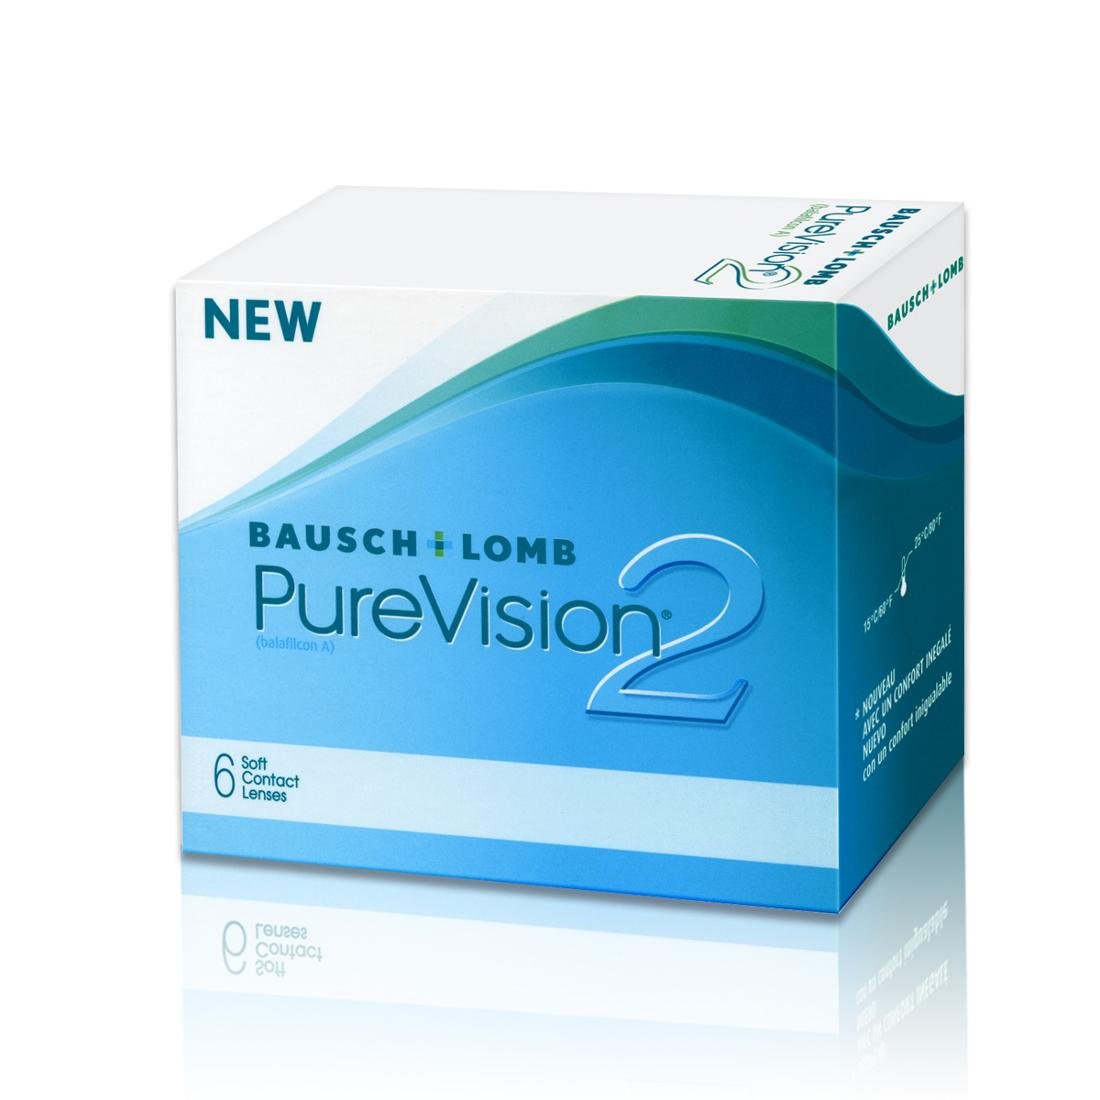 Bausch & Lomb Pure Vision 2 6 szt. Soczewki miesięczne (-7.00 dpt & BC 8.6)